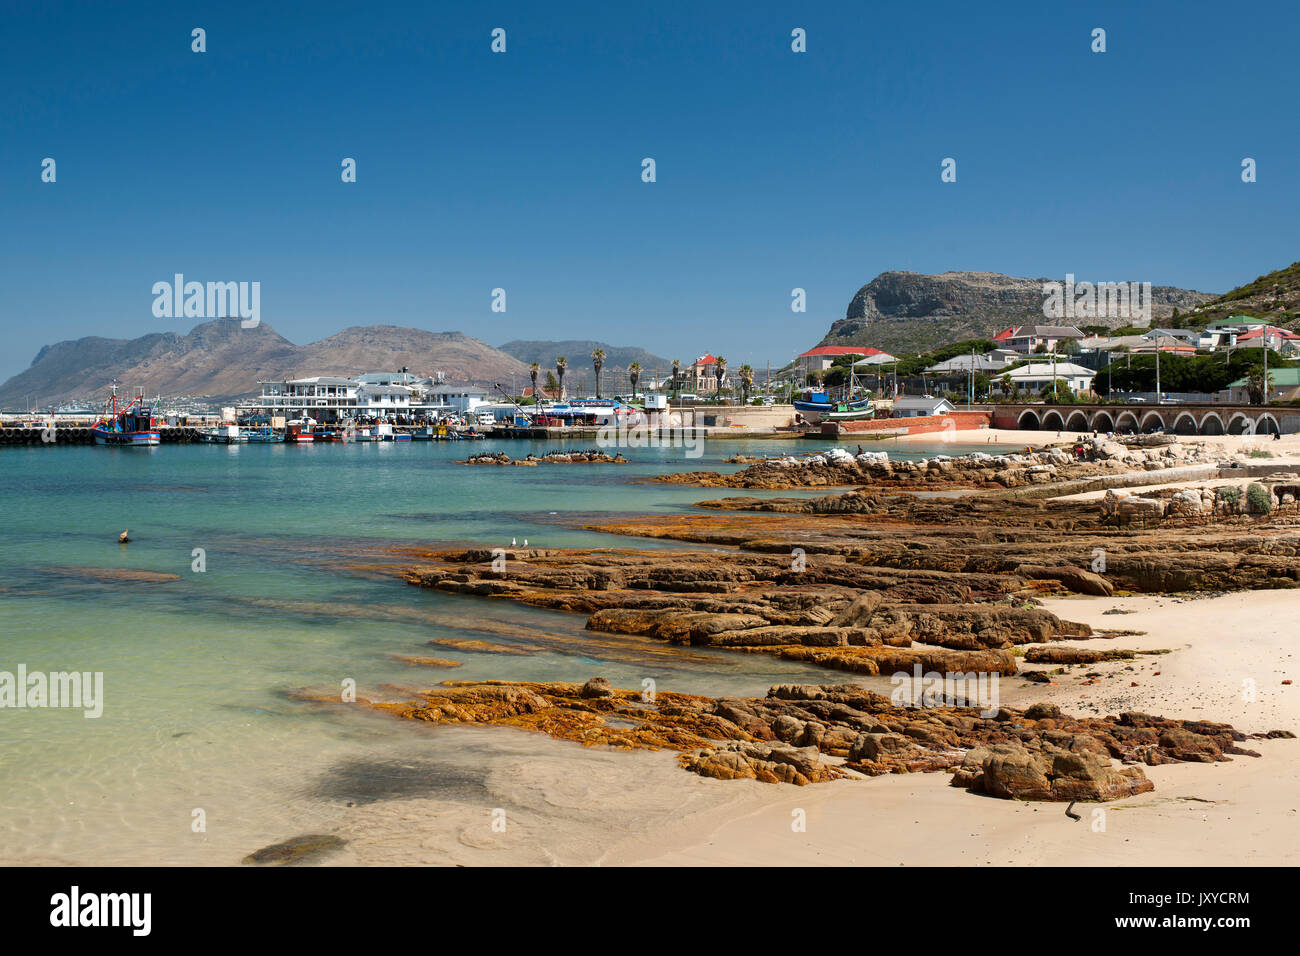 Kalk Bay harbour on Cape Town's Indian Ocean coast. Stock Photo